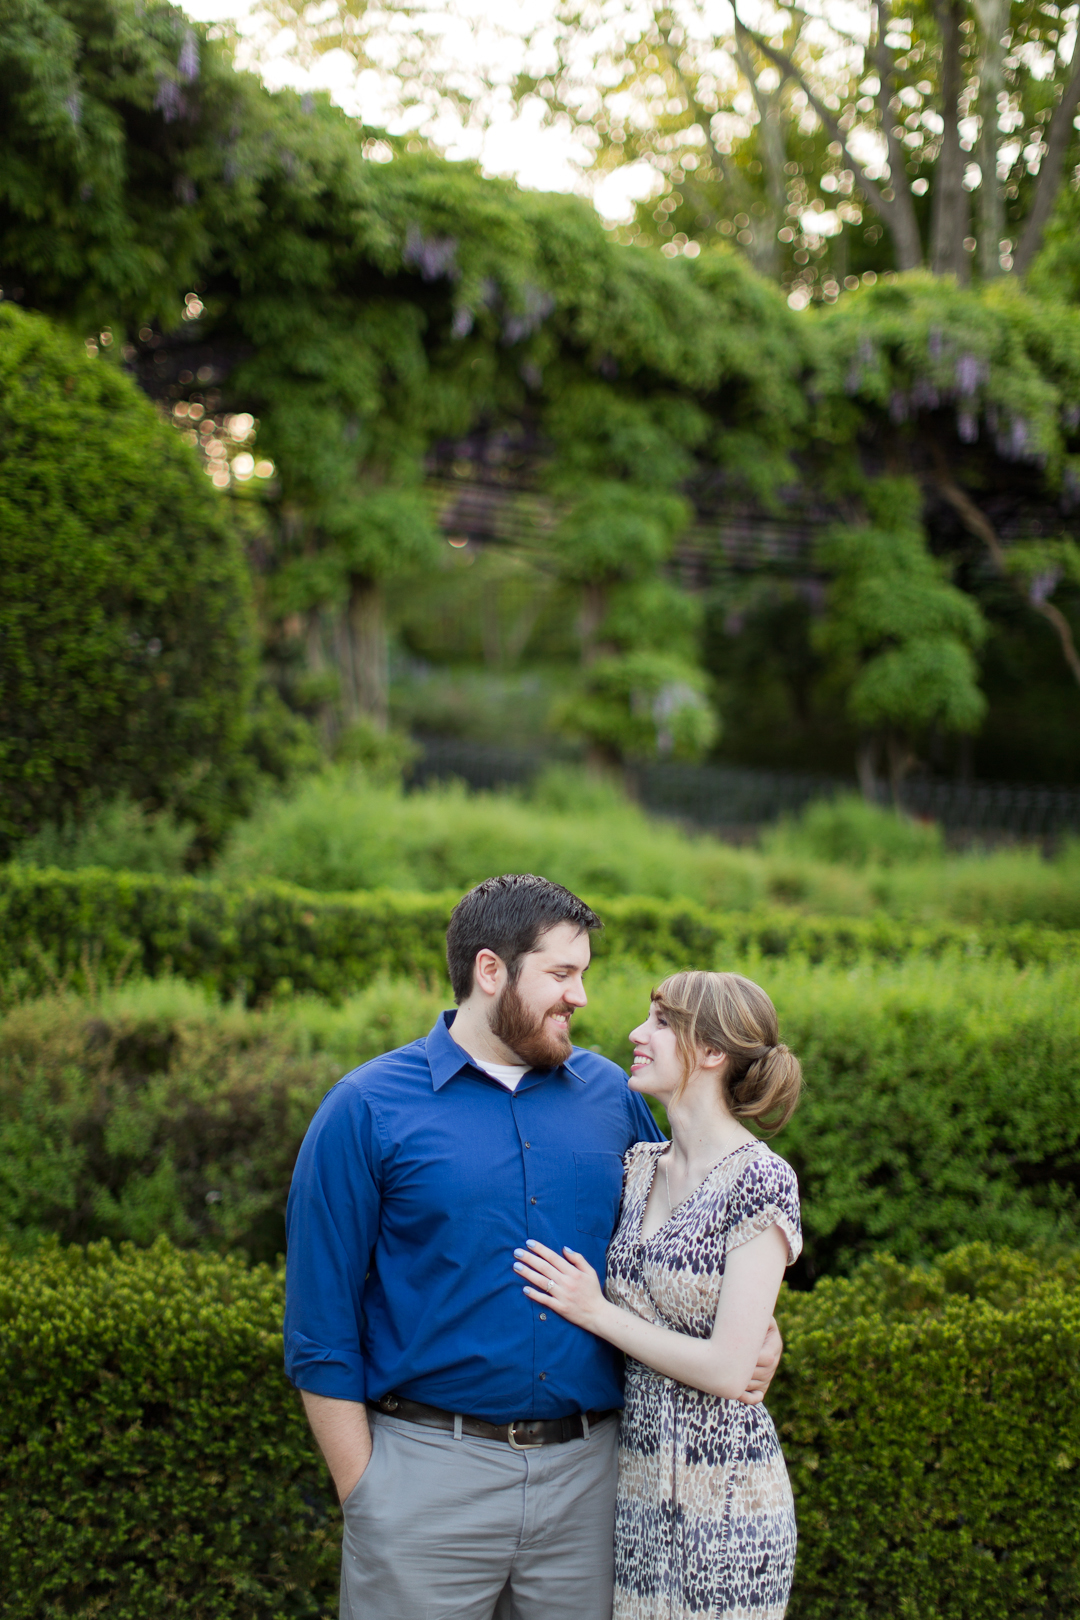 Melissa Kruse Photography - Danielle & Douglas Central Park Conservatory Garden Engagement Photos-106.jpg